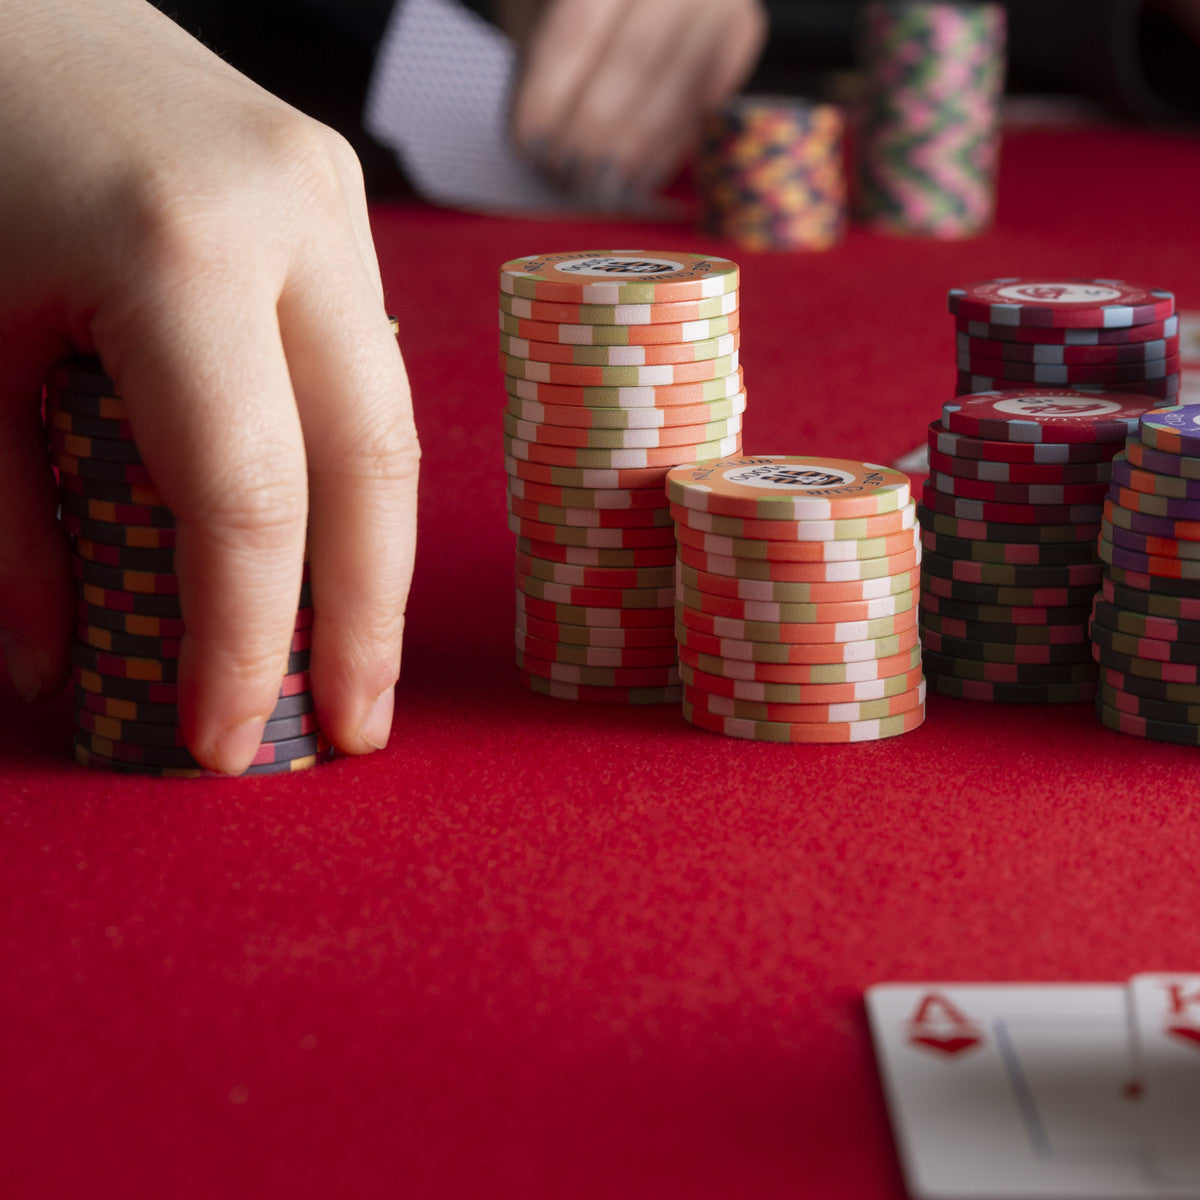 Nile Club Poker Sets In Case